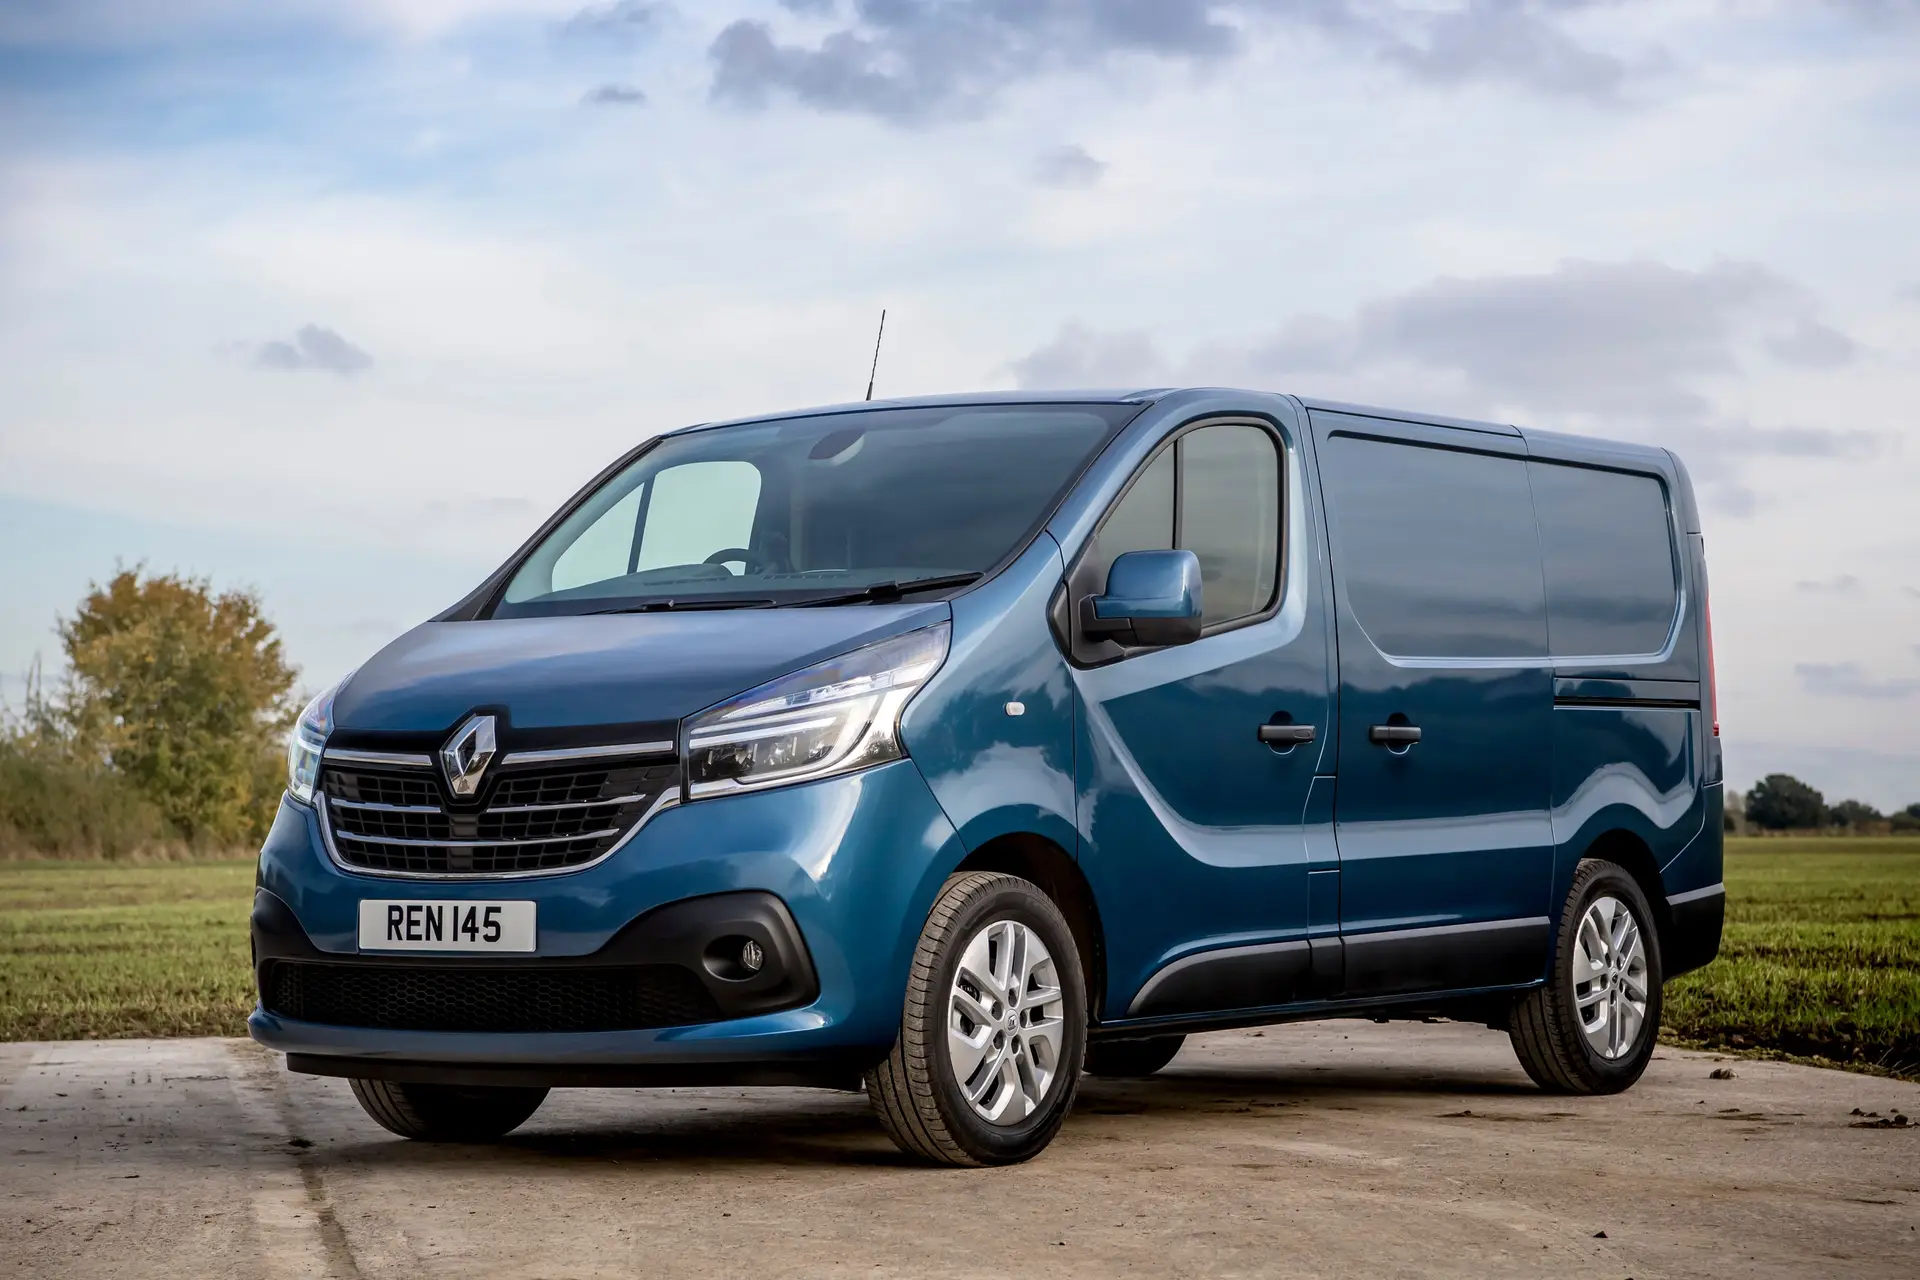 Renault Trafic vs Vauxhall Vivaro: Pros and Cons